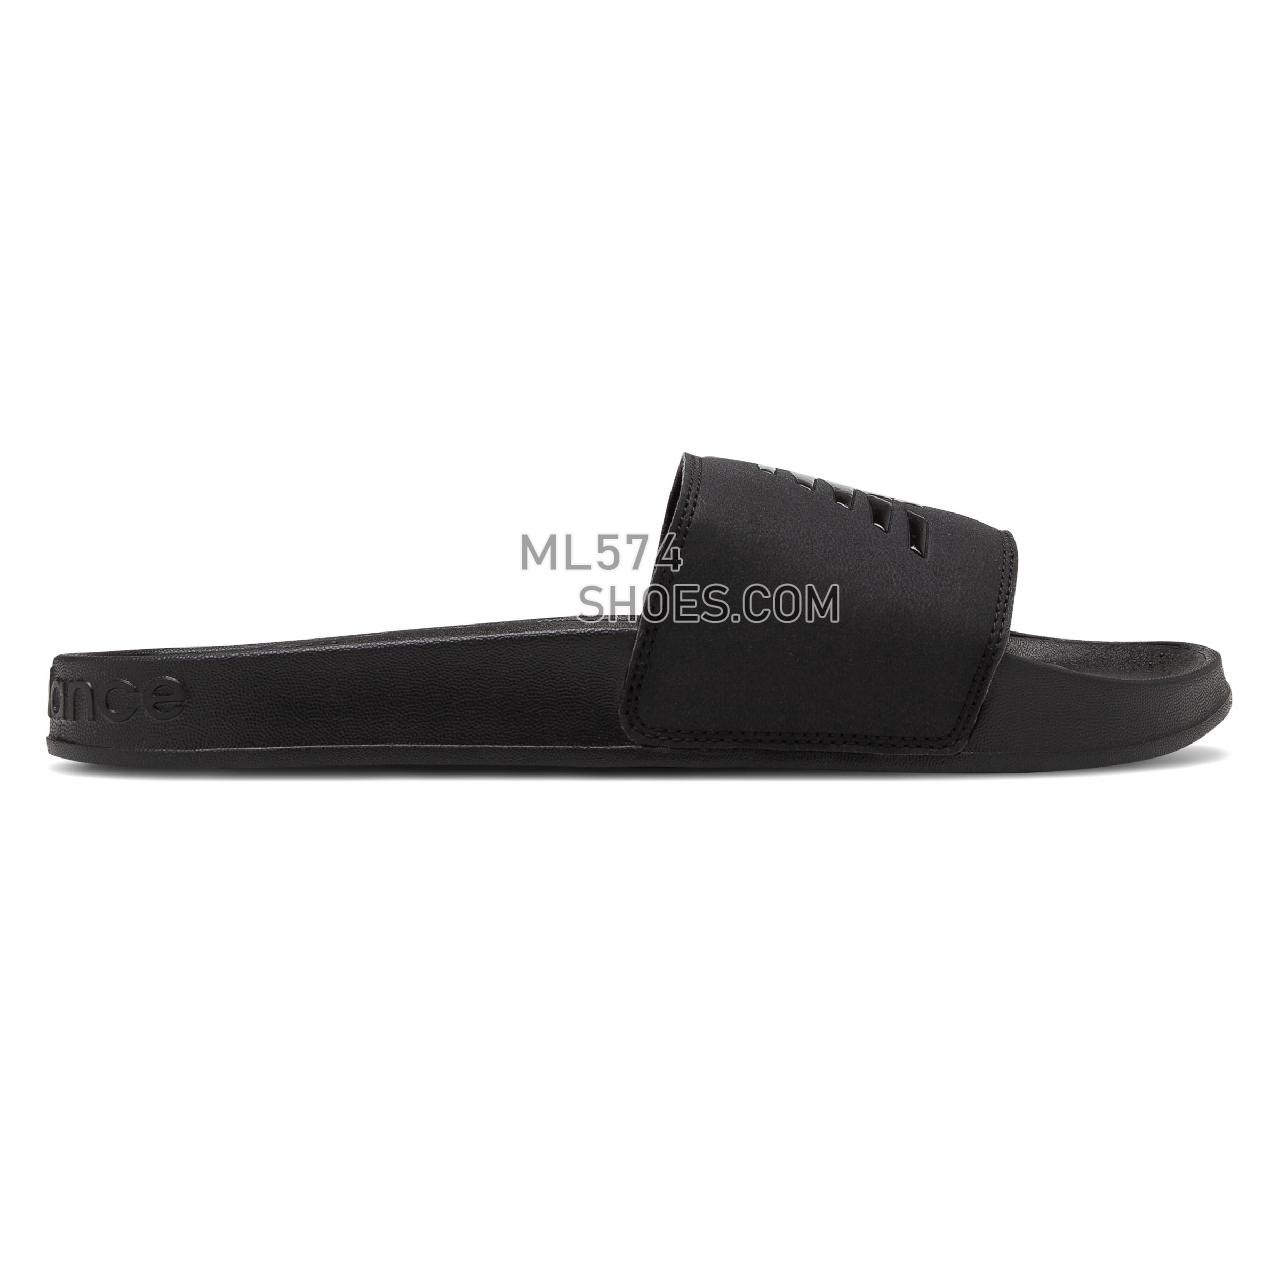 New Balance 200 - Men's Flip Flops - Black - SMF200K1